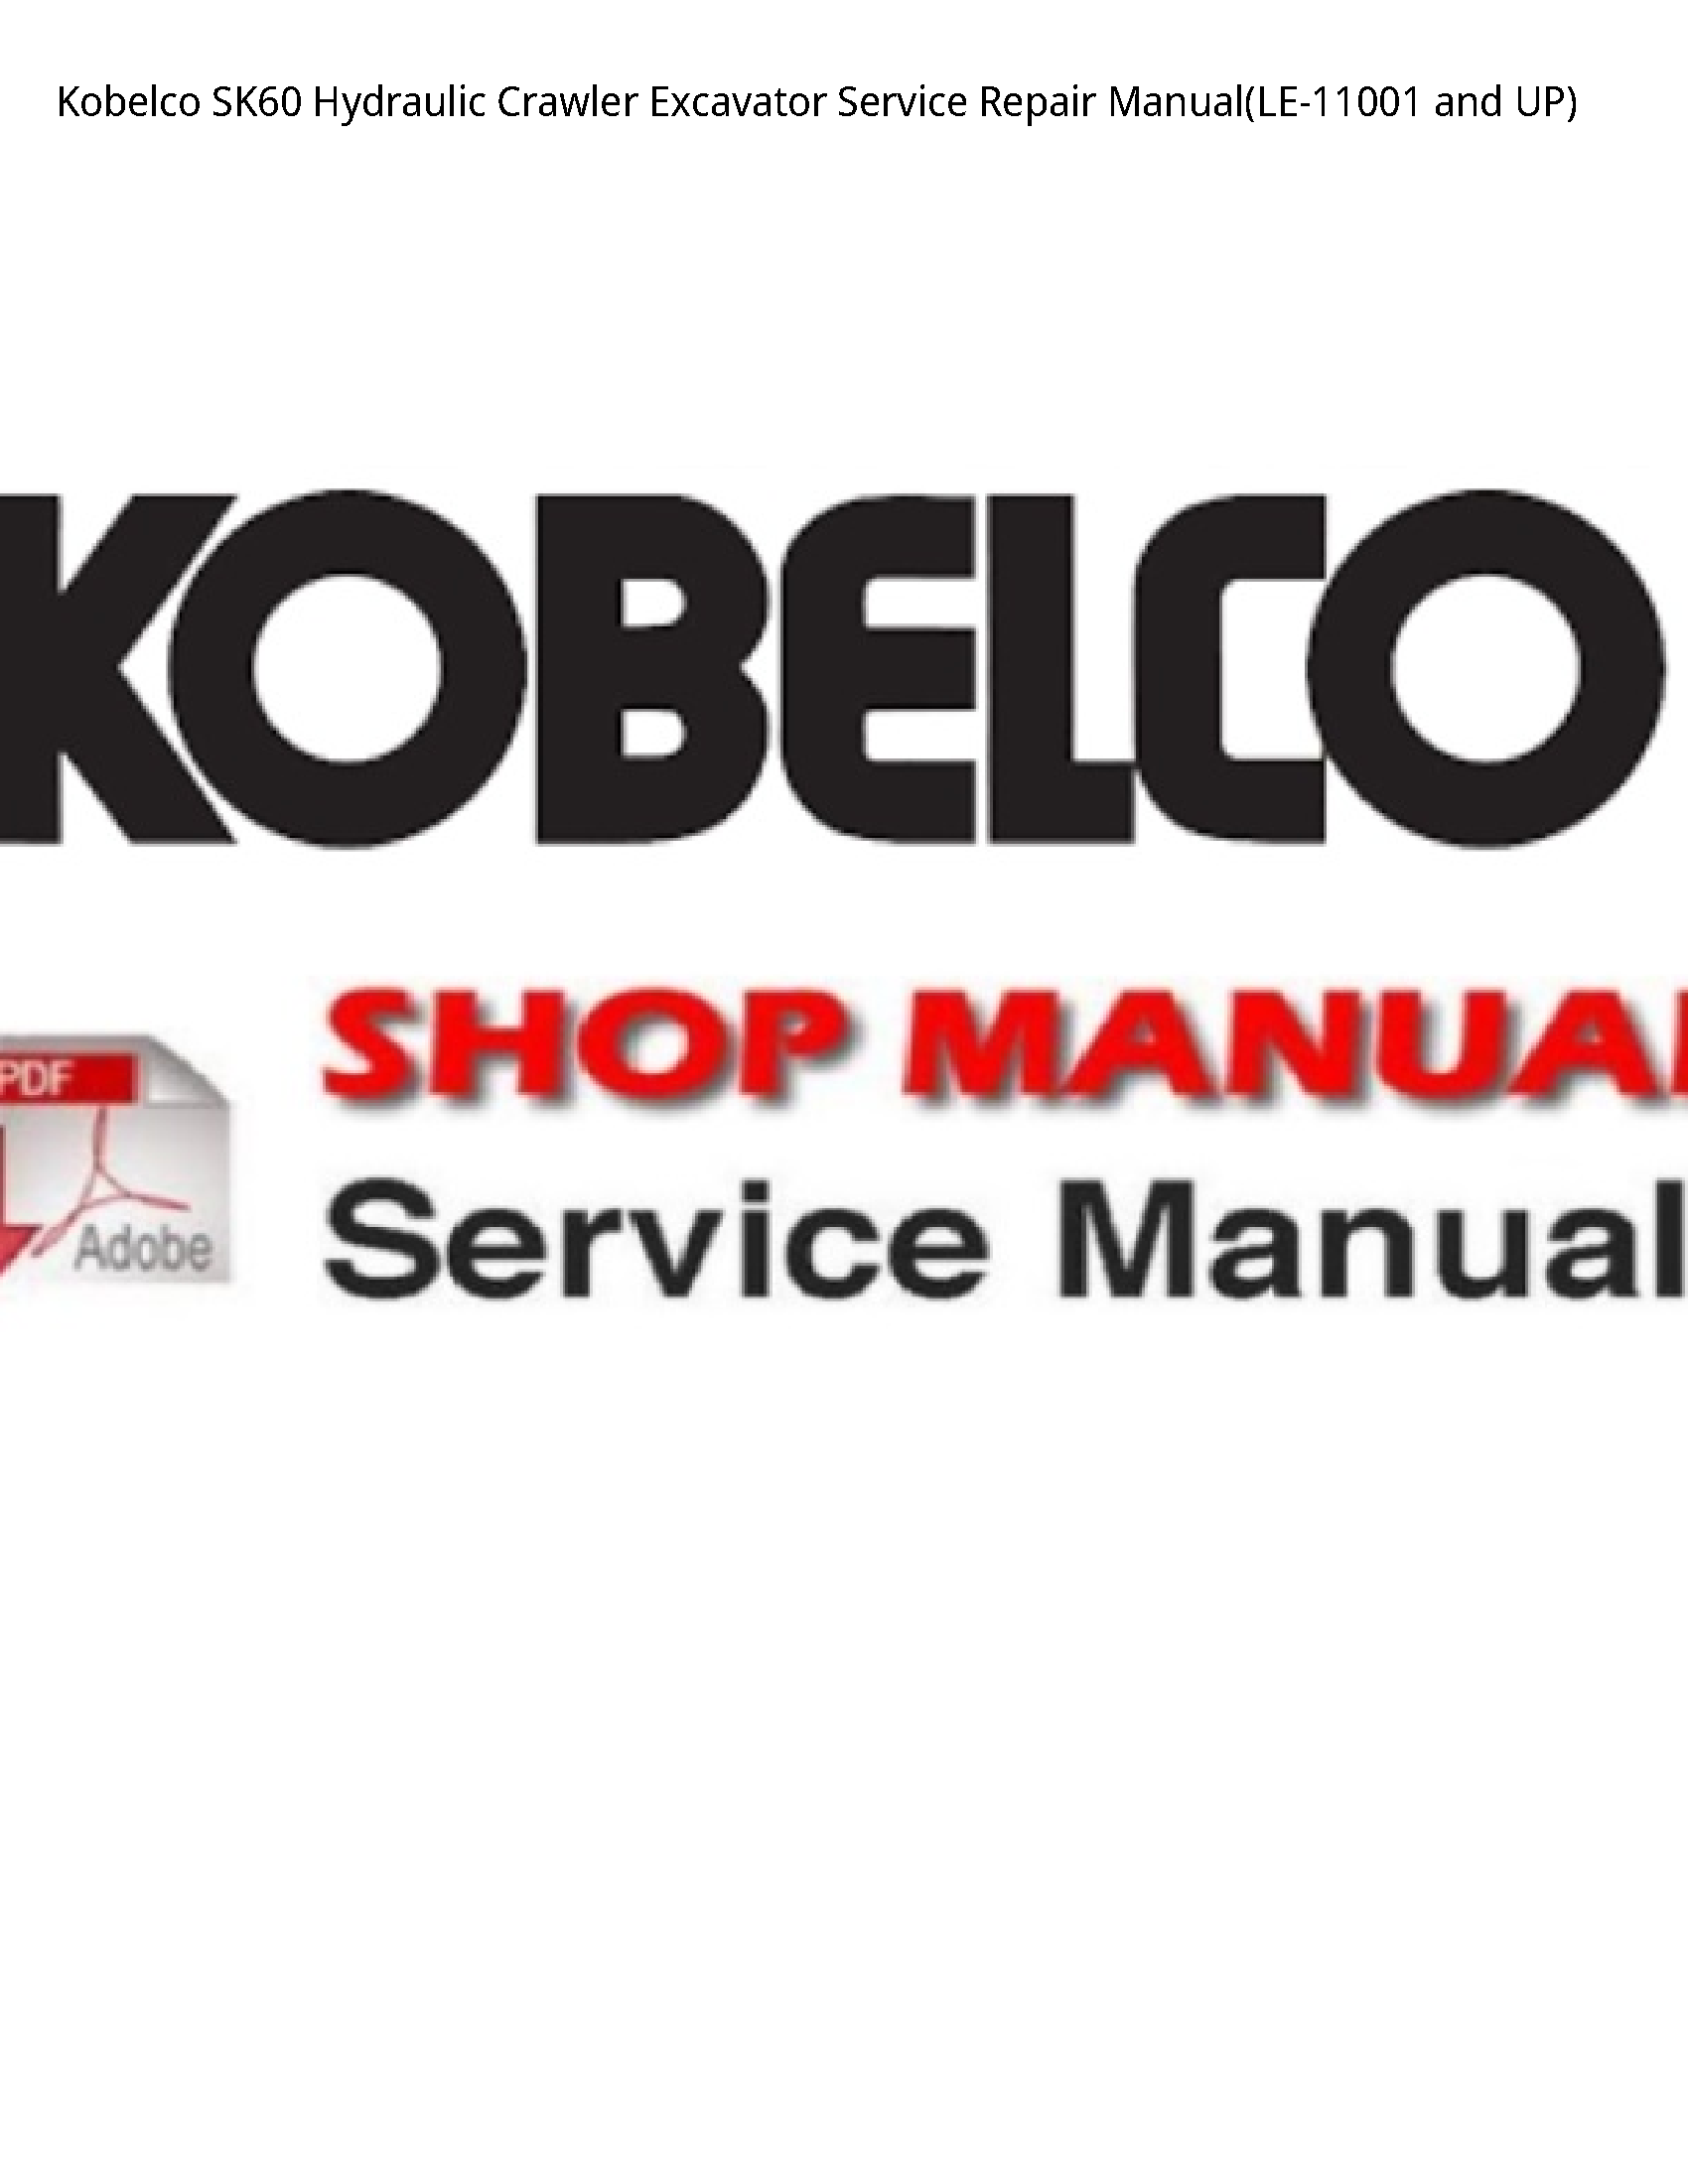 Kobelco SK60 Hydraulic Crawler Excavator manual